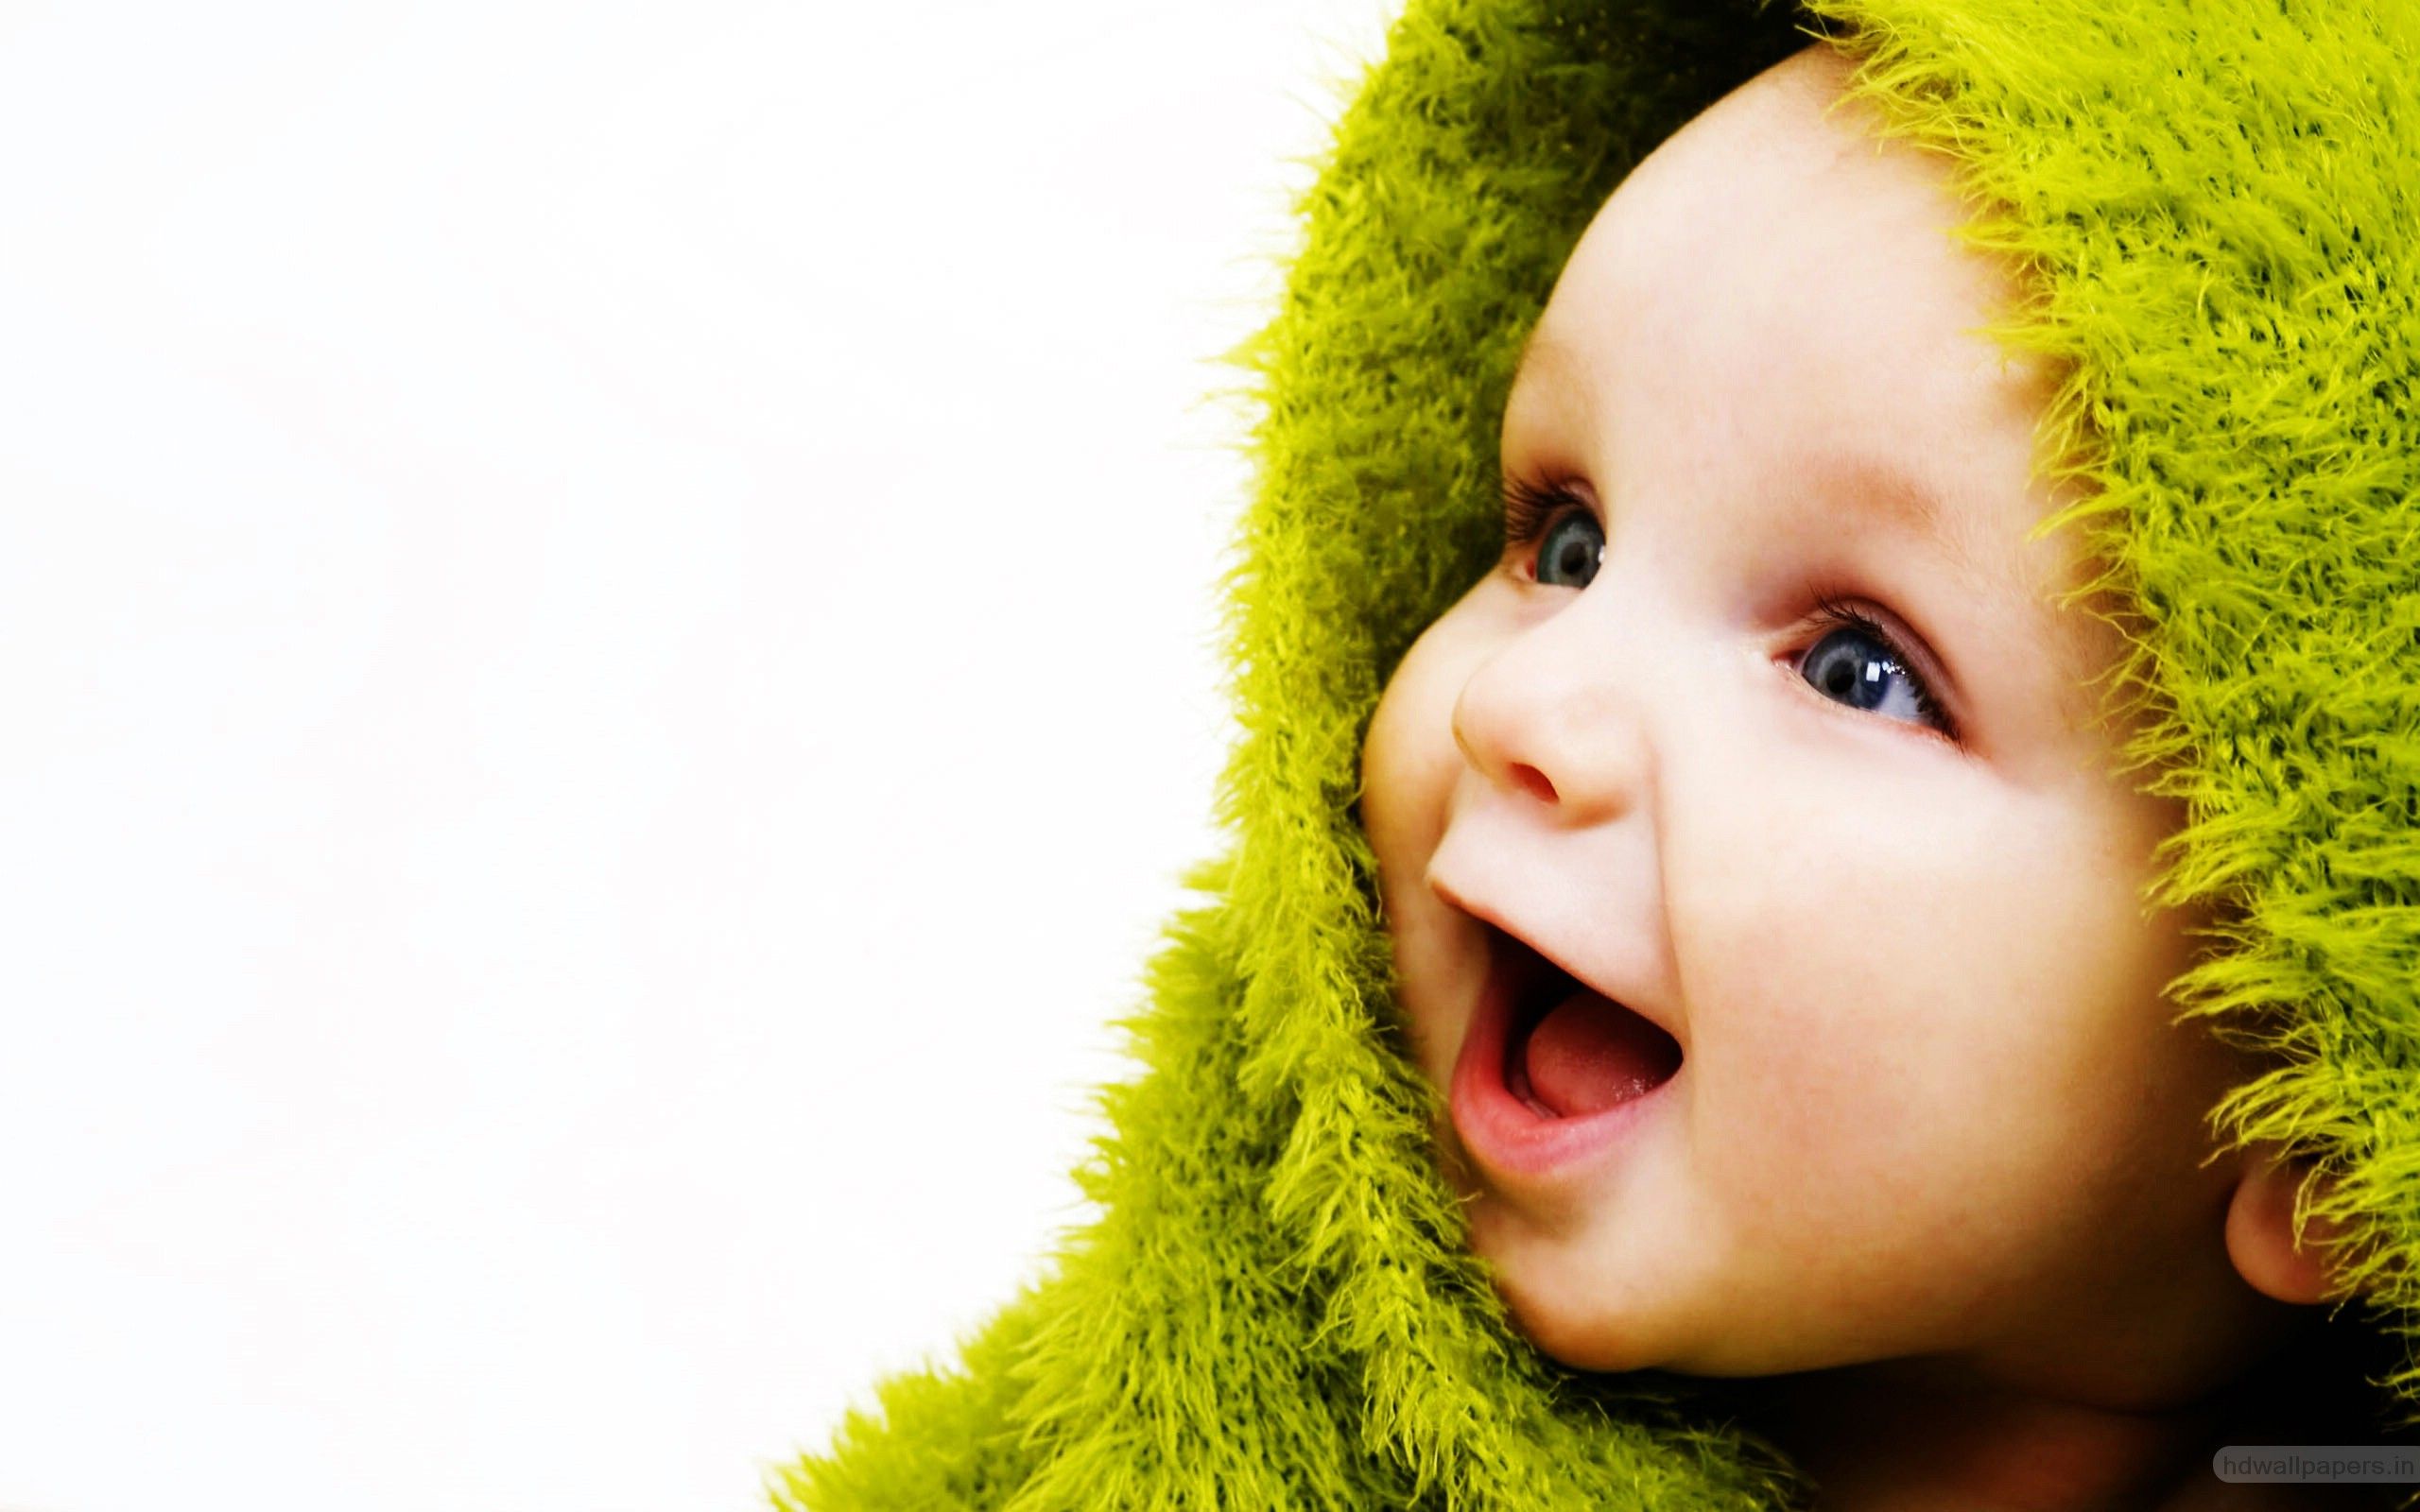 Cute Baby HD Wallpaper For Desktop. Lovely Baby Girl HD Wallpaper Collection. High Resulation Wallpaper